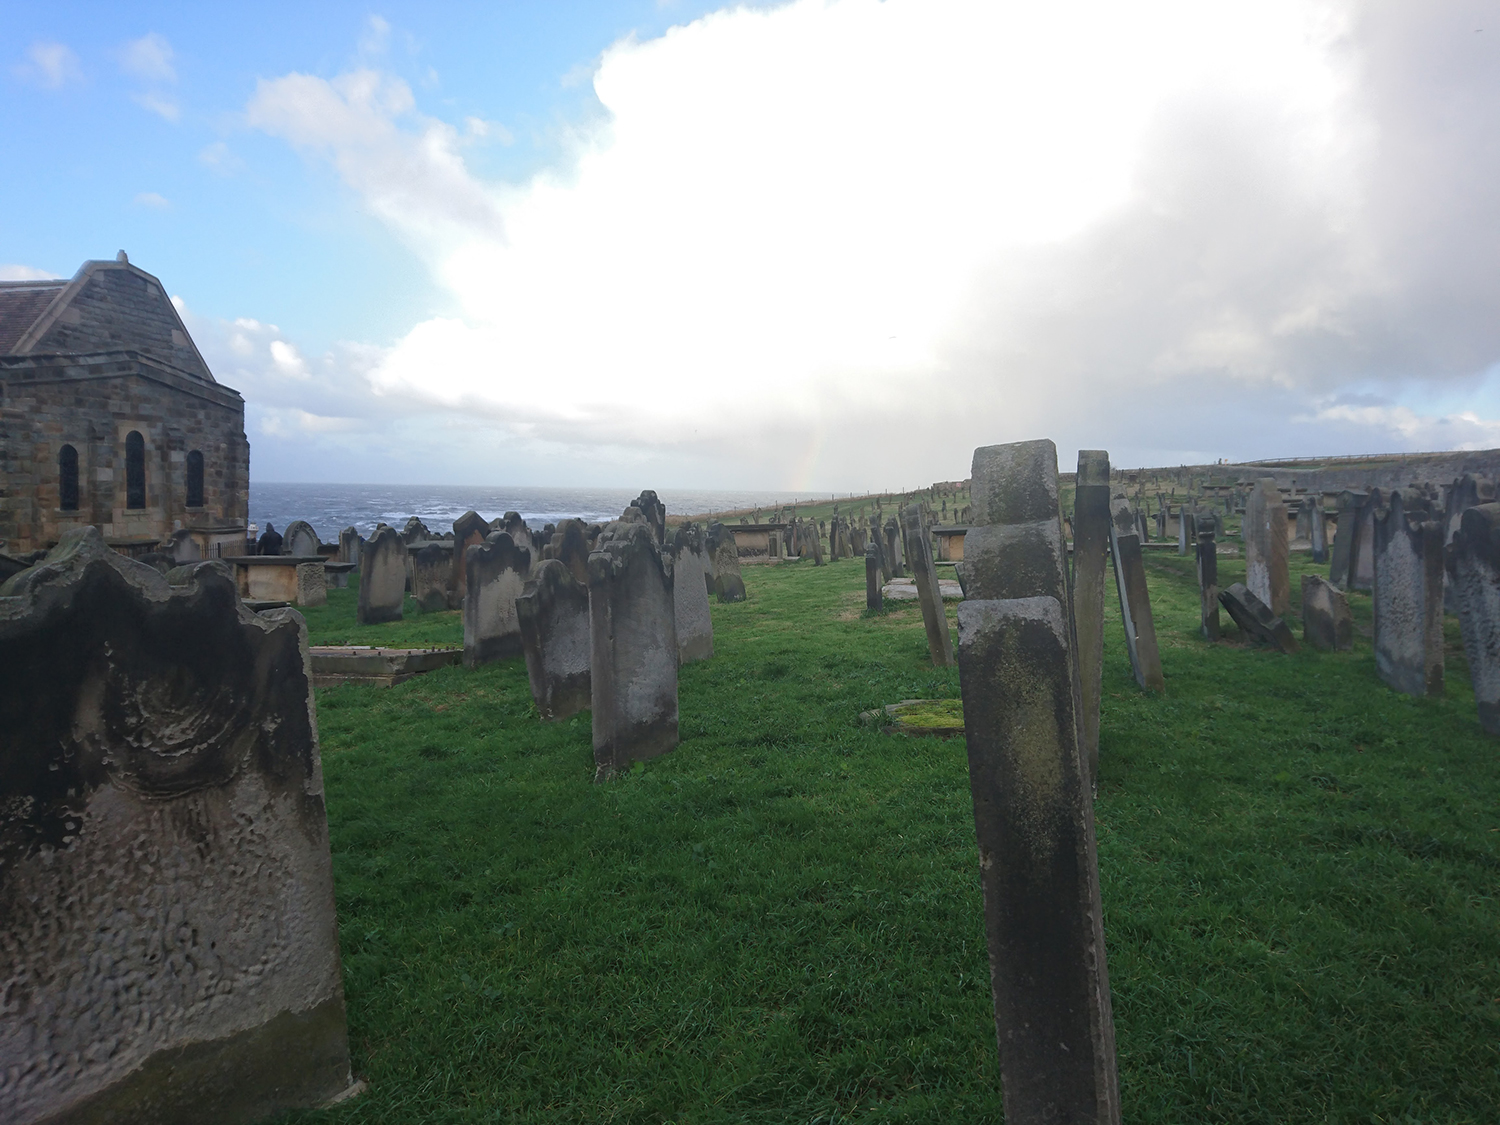 Whitby Abbey Graveyard